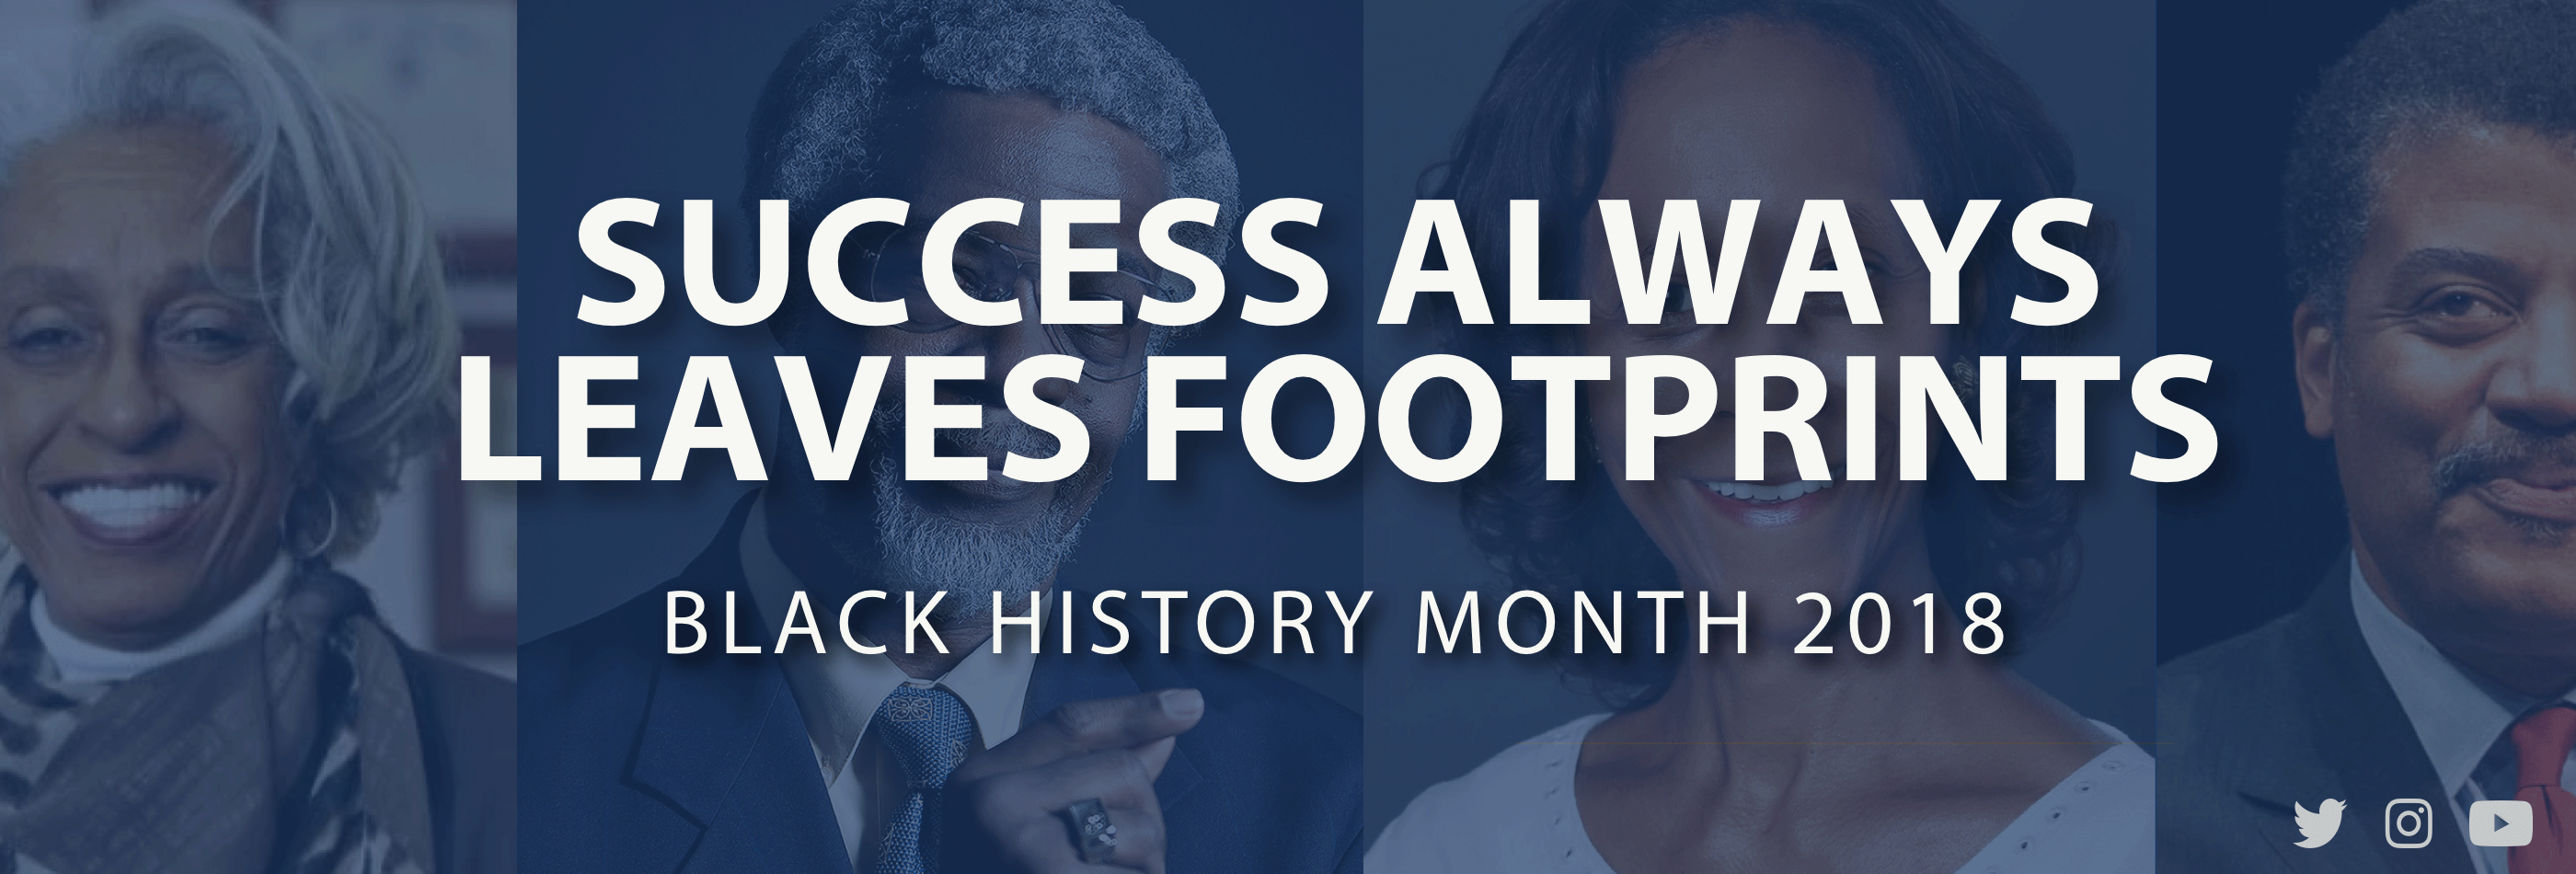 Success Always Leaves Footprints - Black History Month 2018